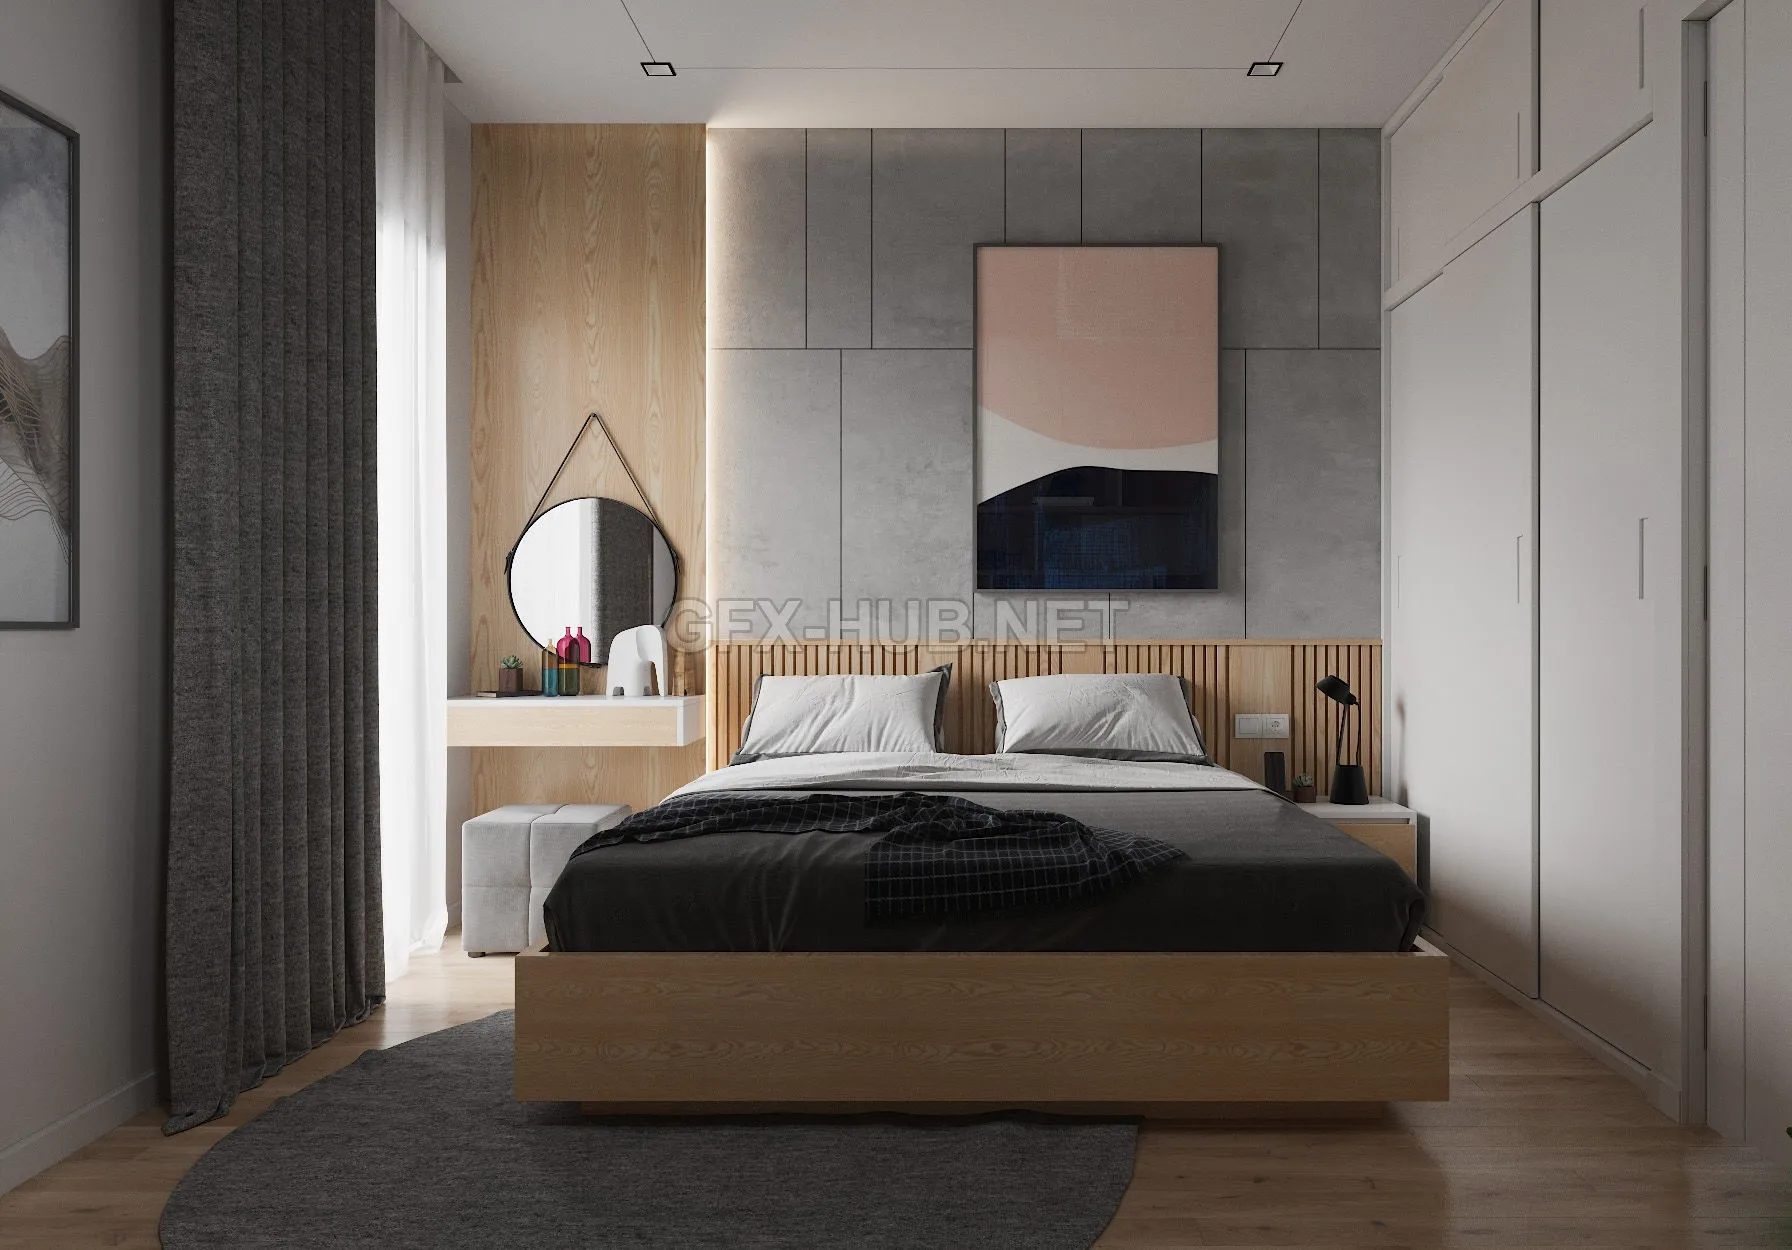 Cgtrader – Bedroom minimalism modern 3D model – 209933